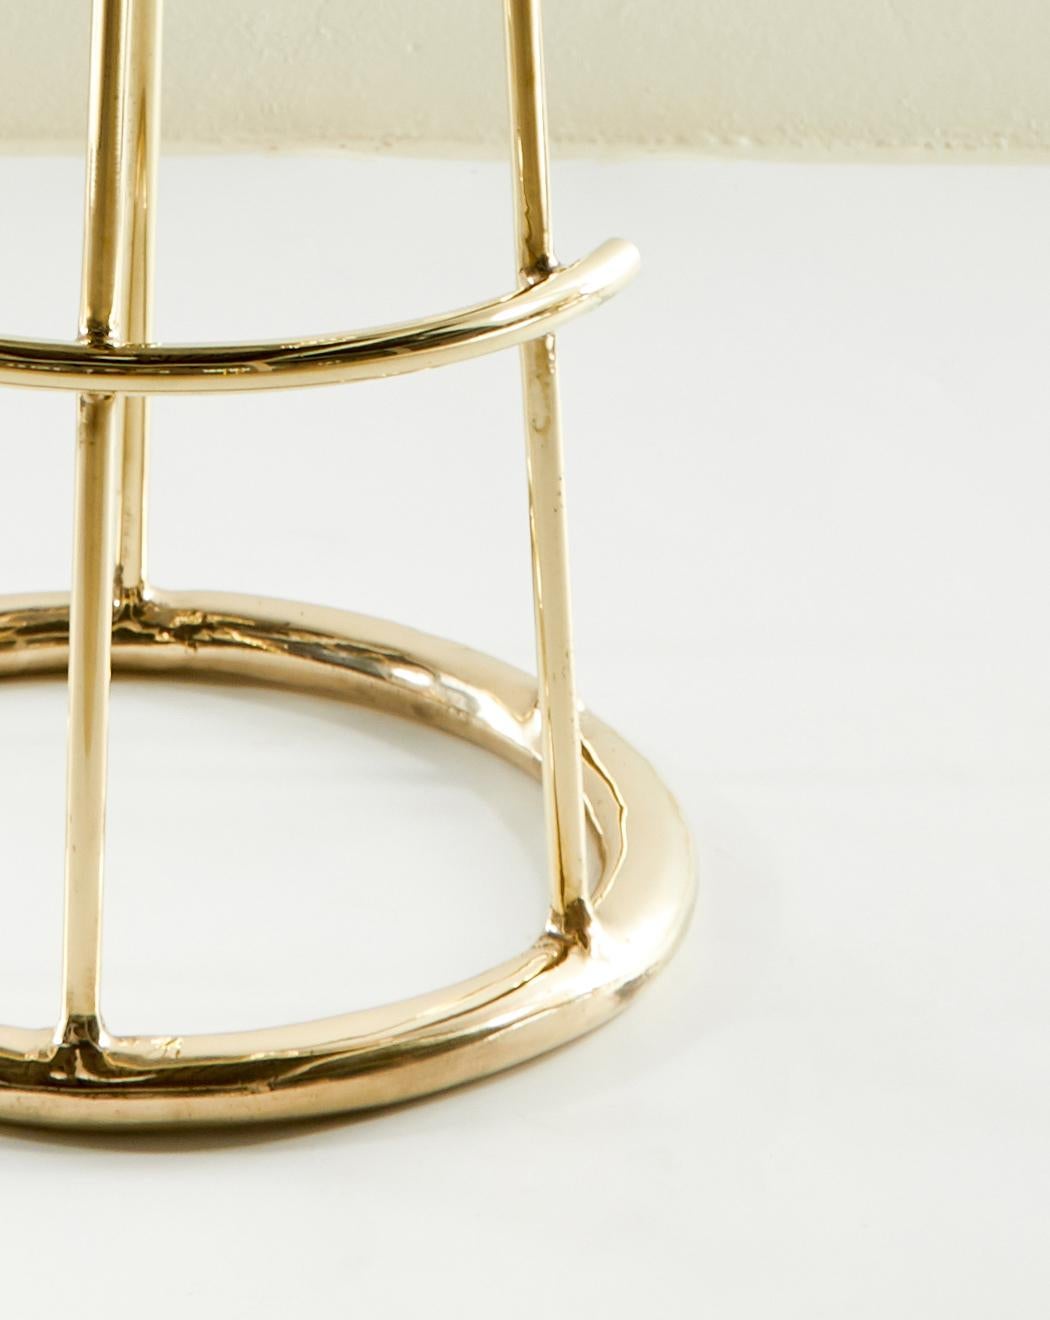 Brass sculpted stool, Misaya
Dimensions: W 36 x L 36 x H 65 cm
Hand-sculpted stool.